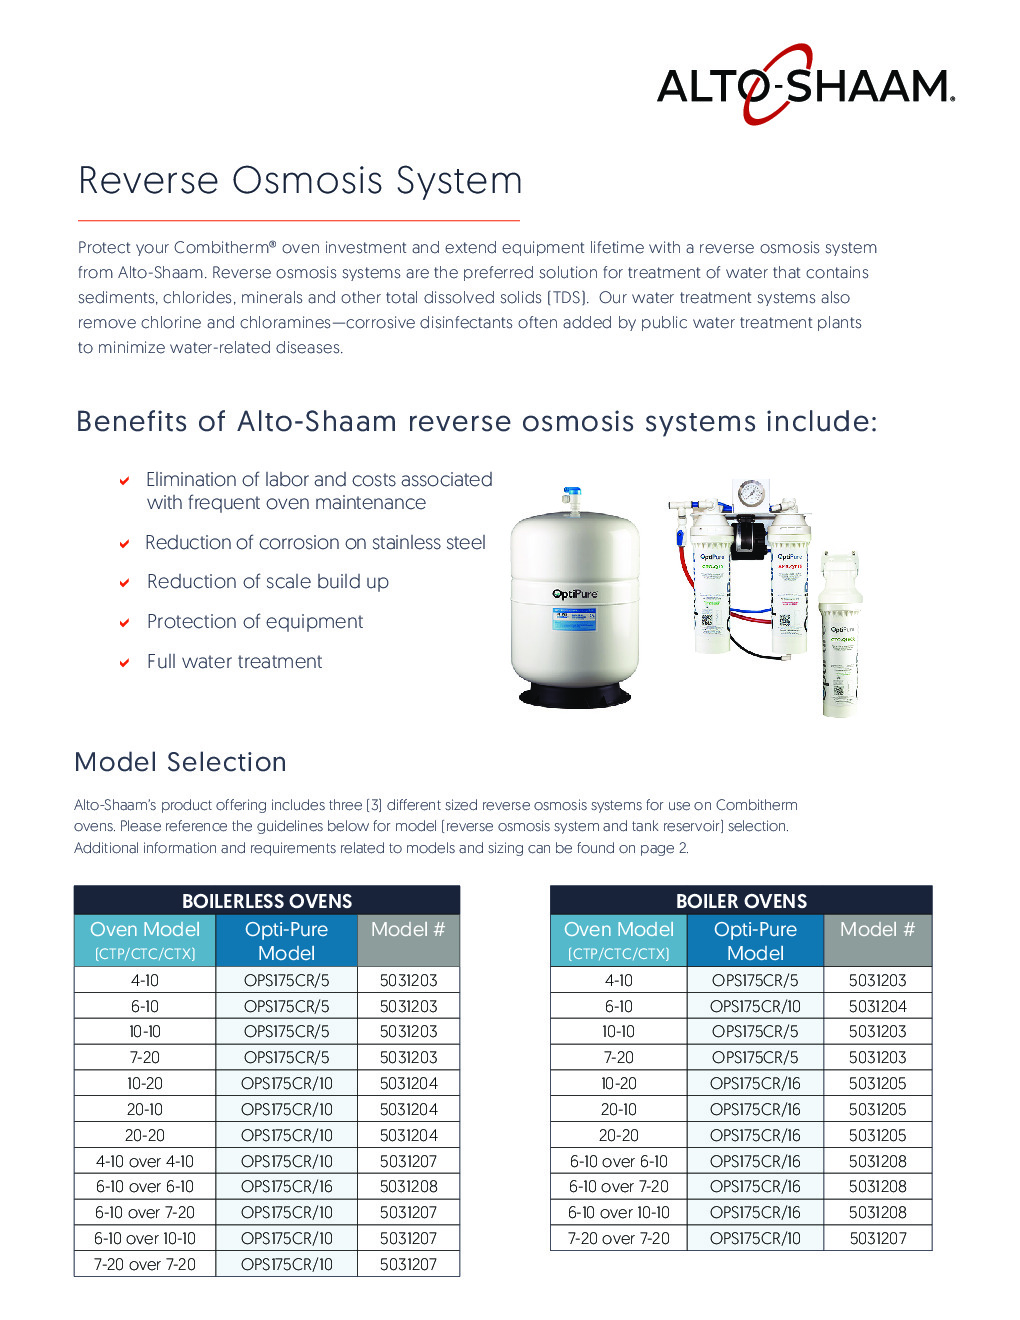 Alto-Shaam 5031204 Reverse Osmosis System